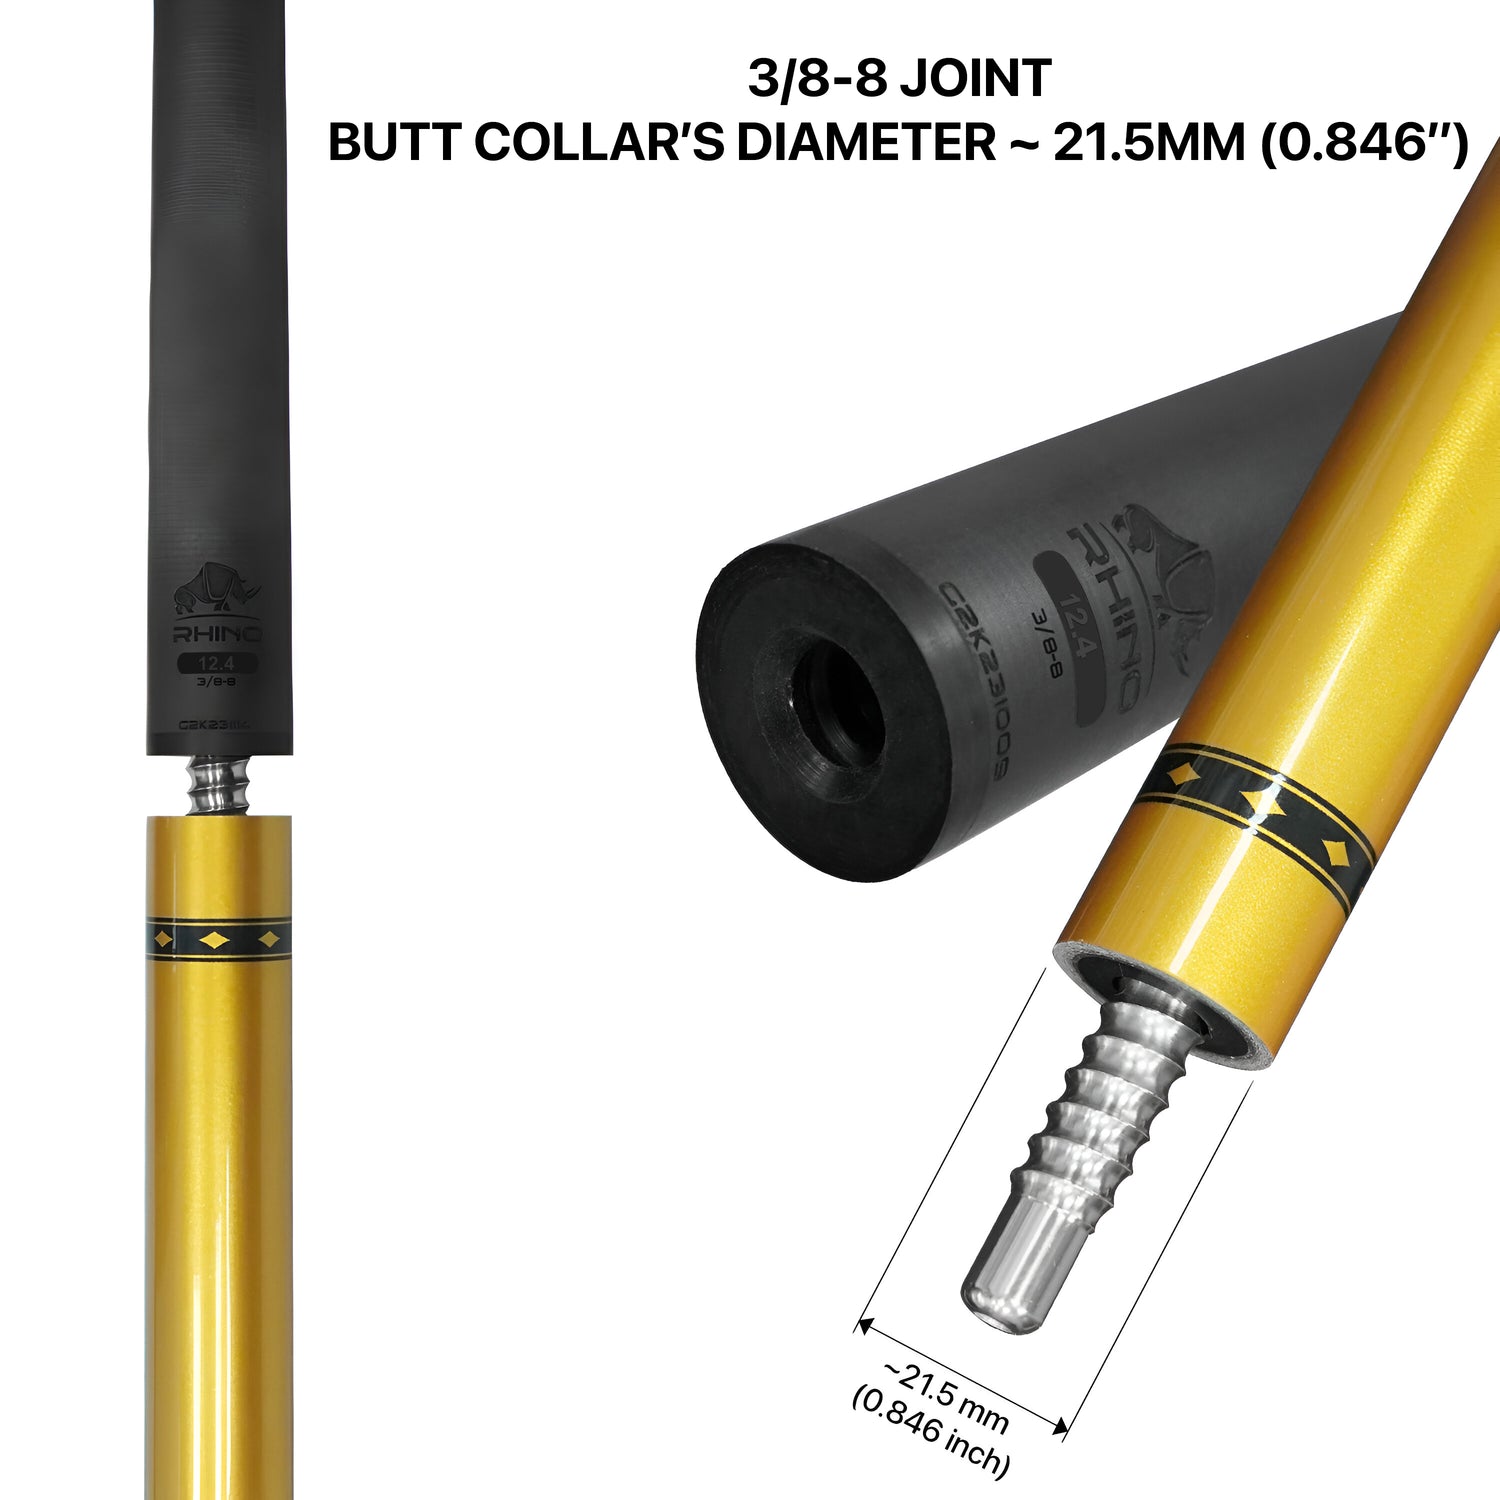 Nebula Pool Cue - Yellow (3/8-8 Joint) - 12.4 mm Tip Diameter